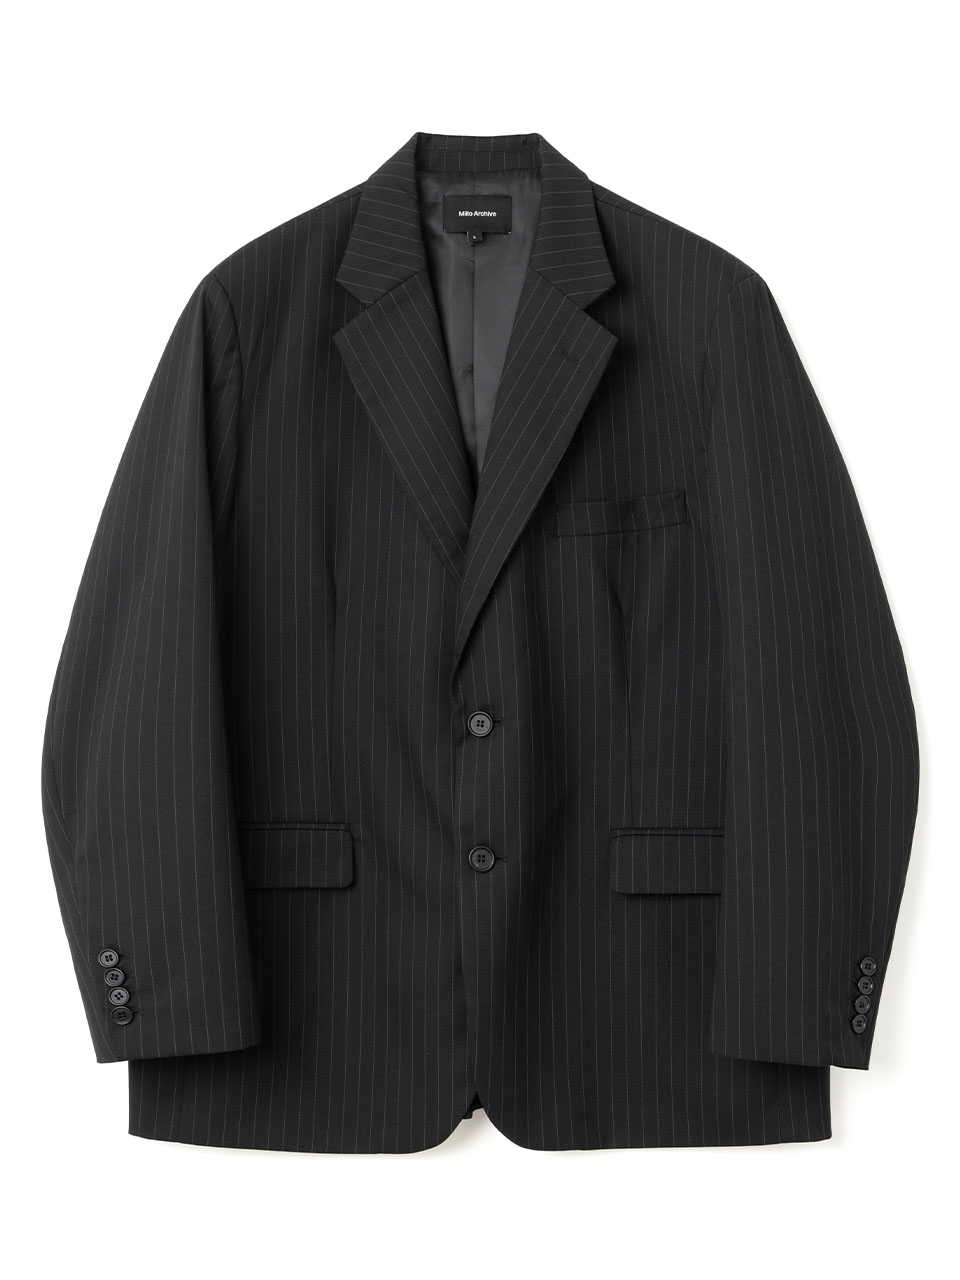 Editorial Jacket [Stripe Black]